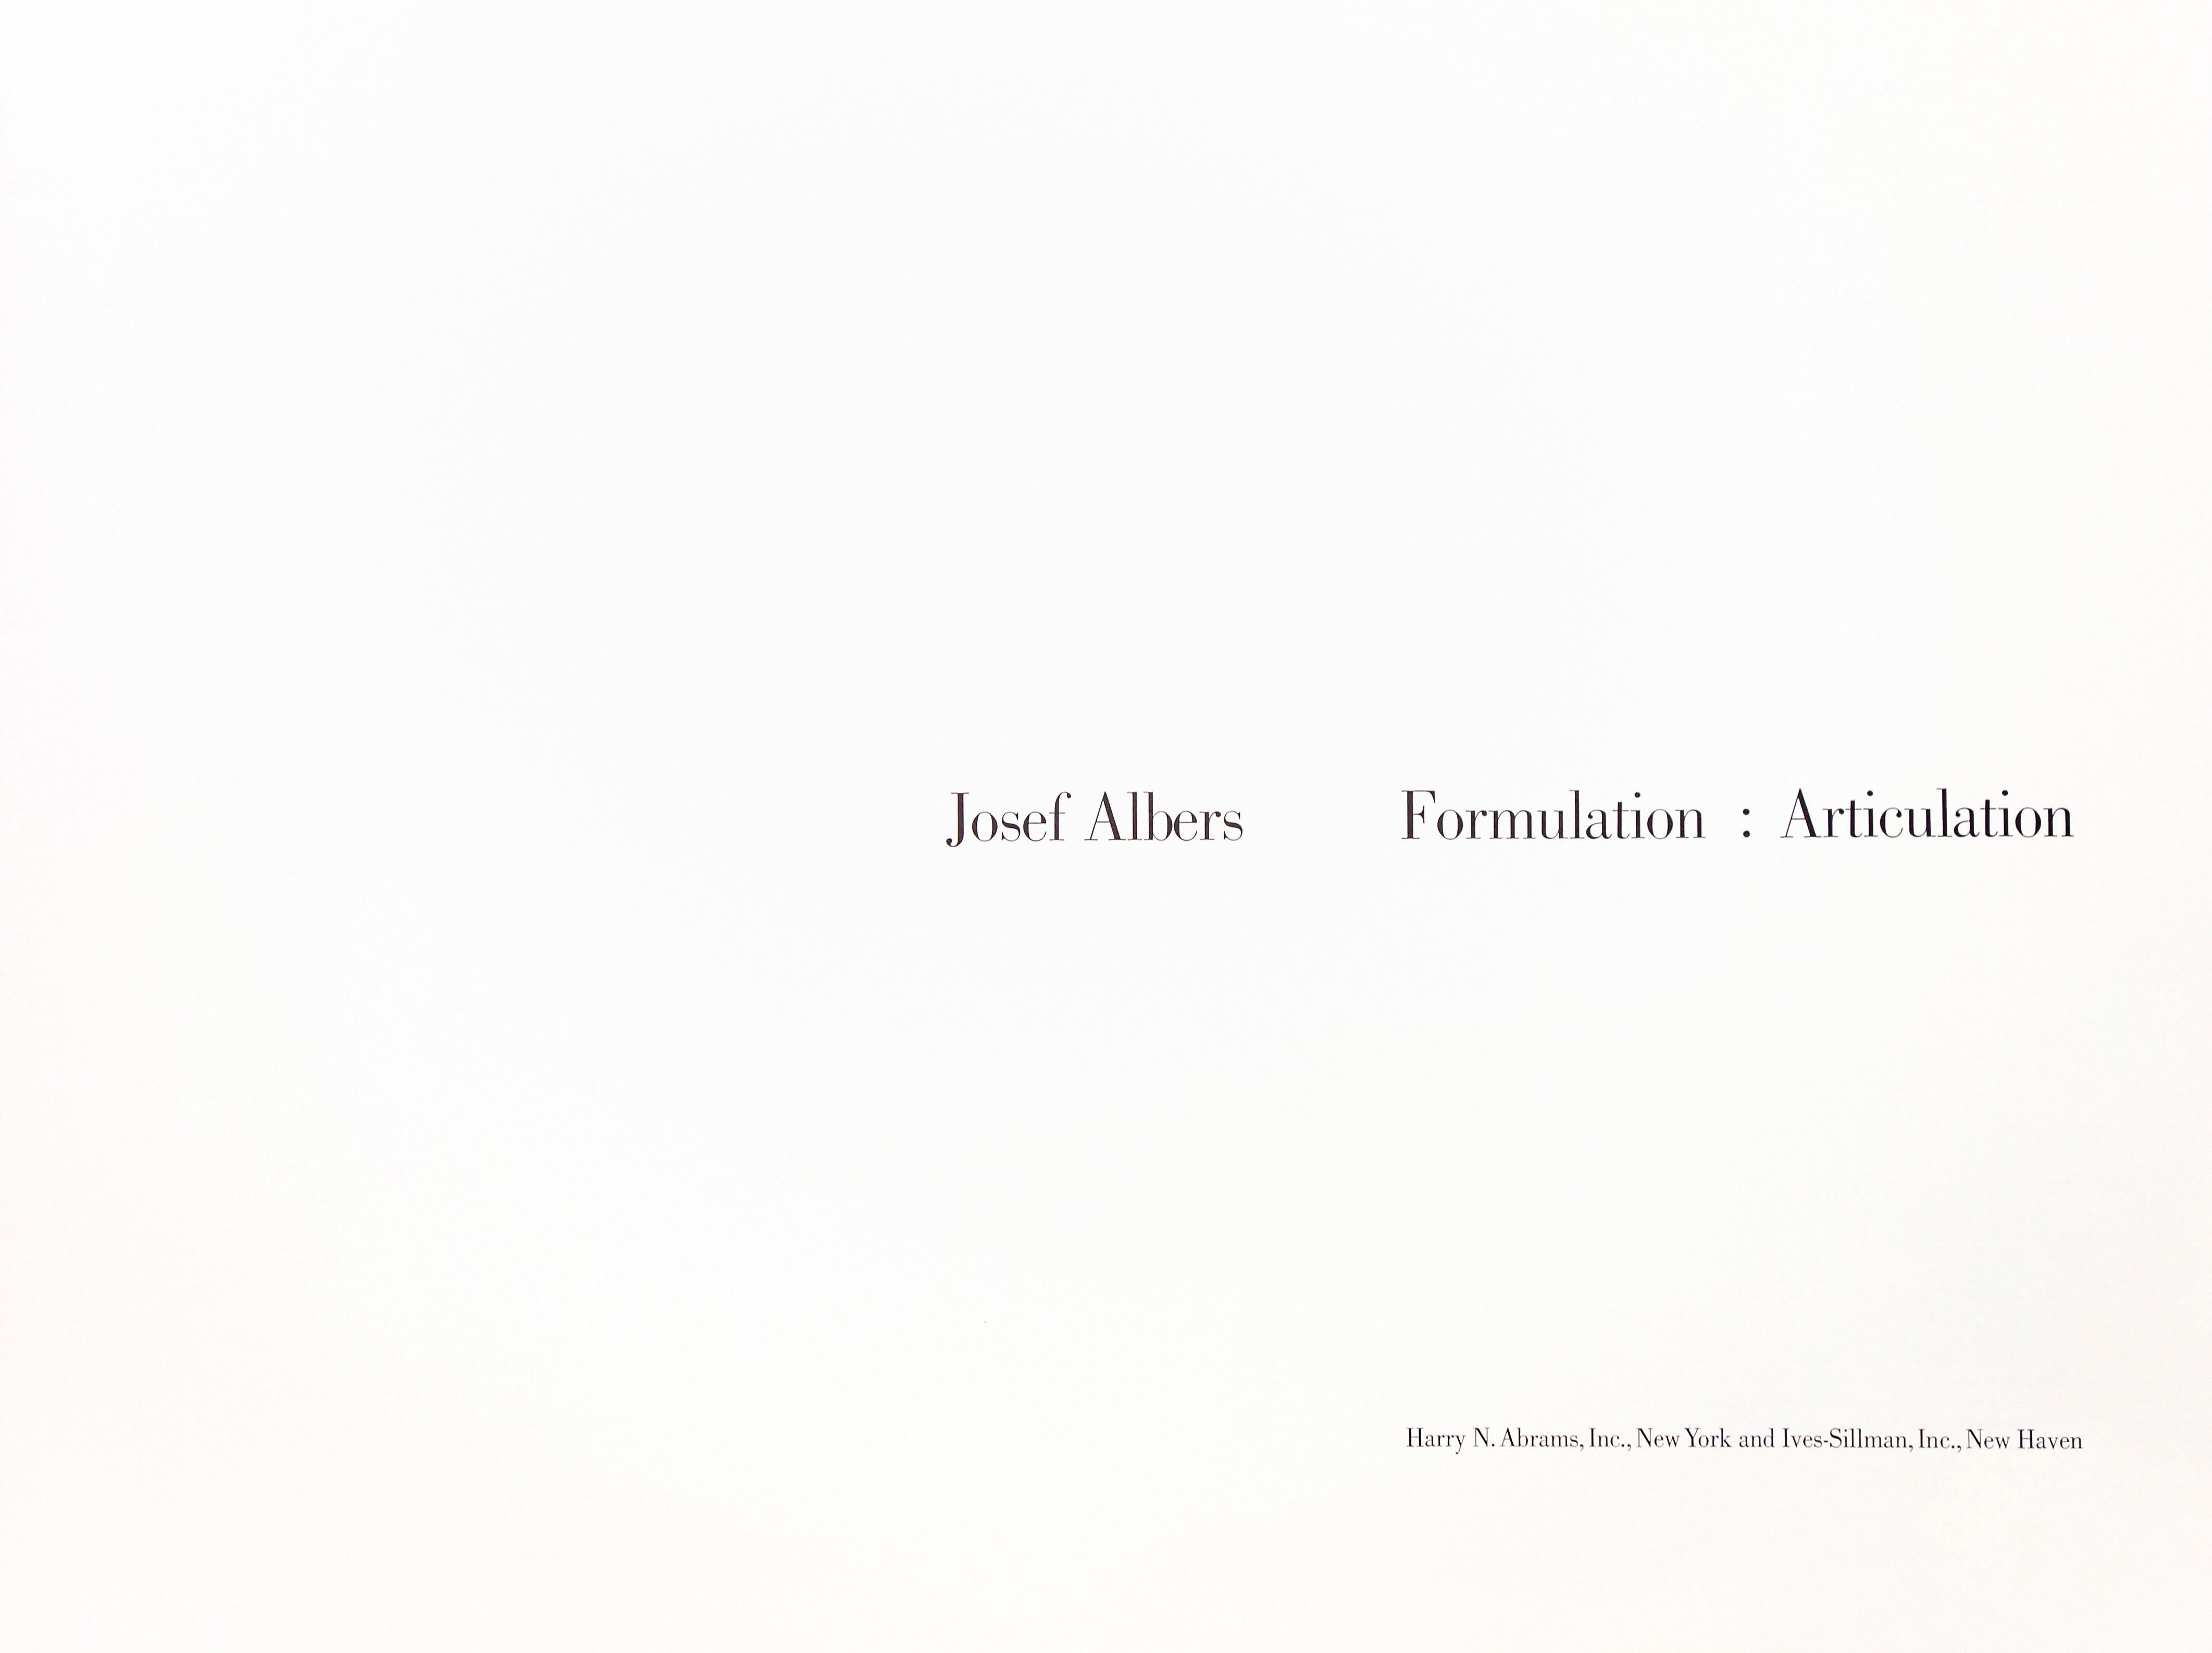 Formulation : Articulation Portfolio II Folder 9 (B) - Abstract Print by Josef Albers